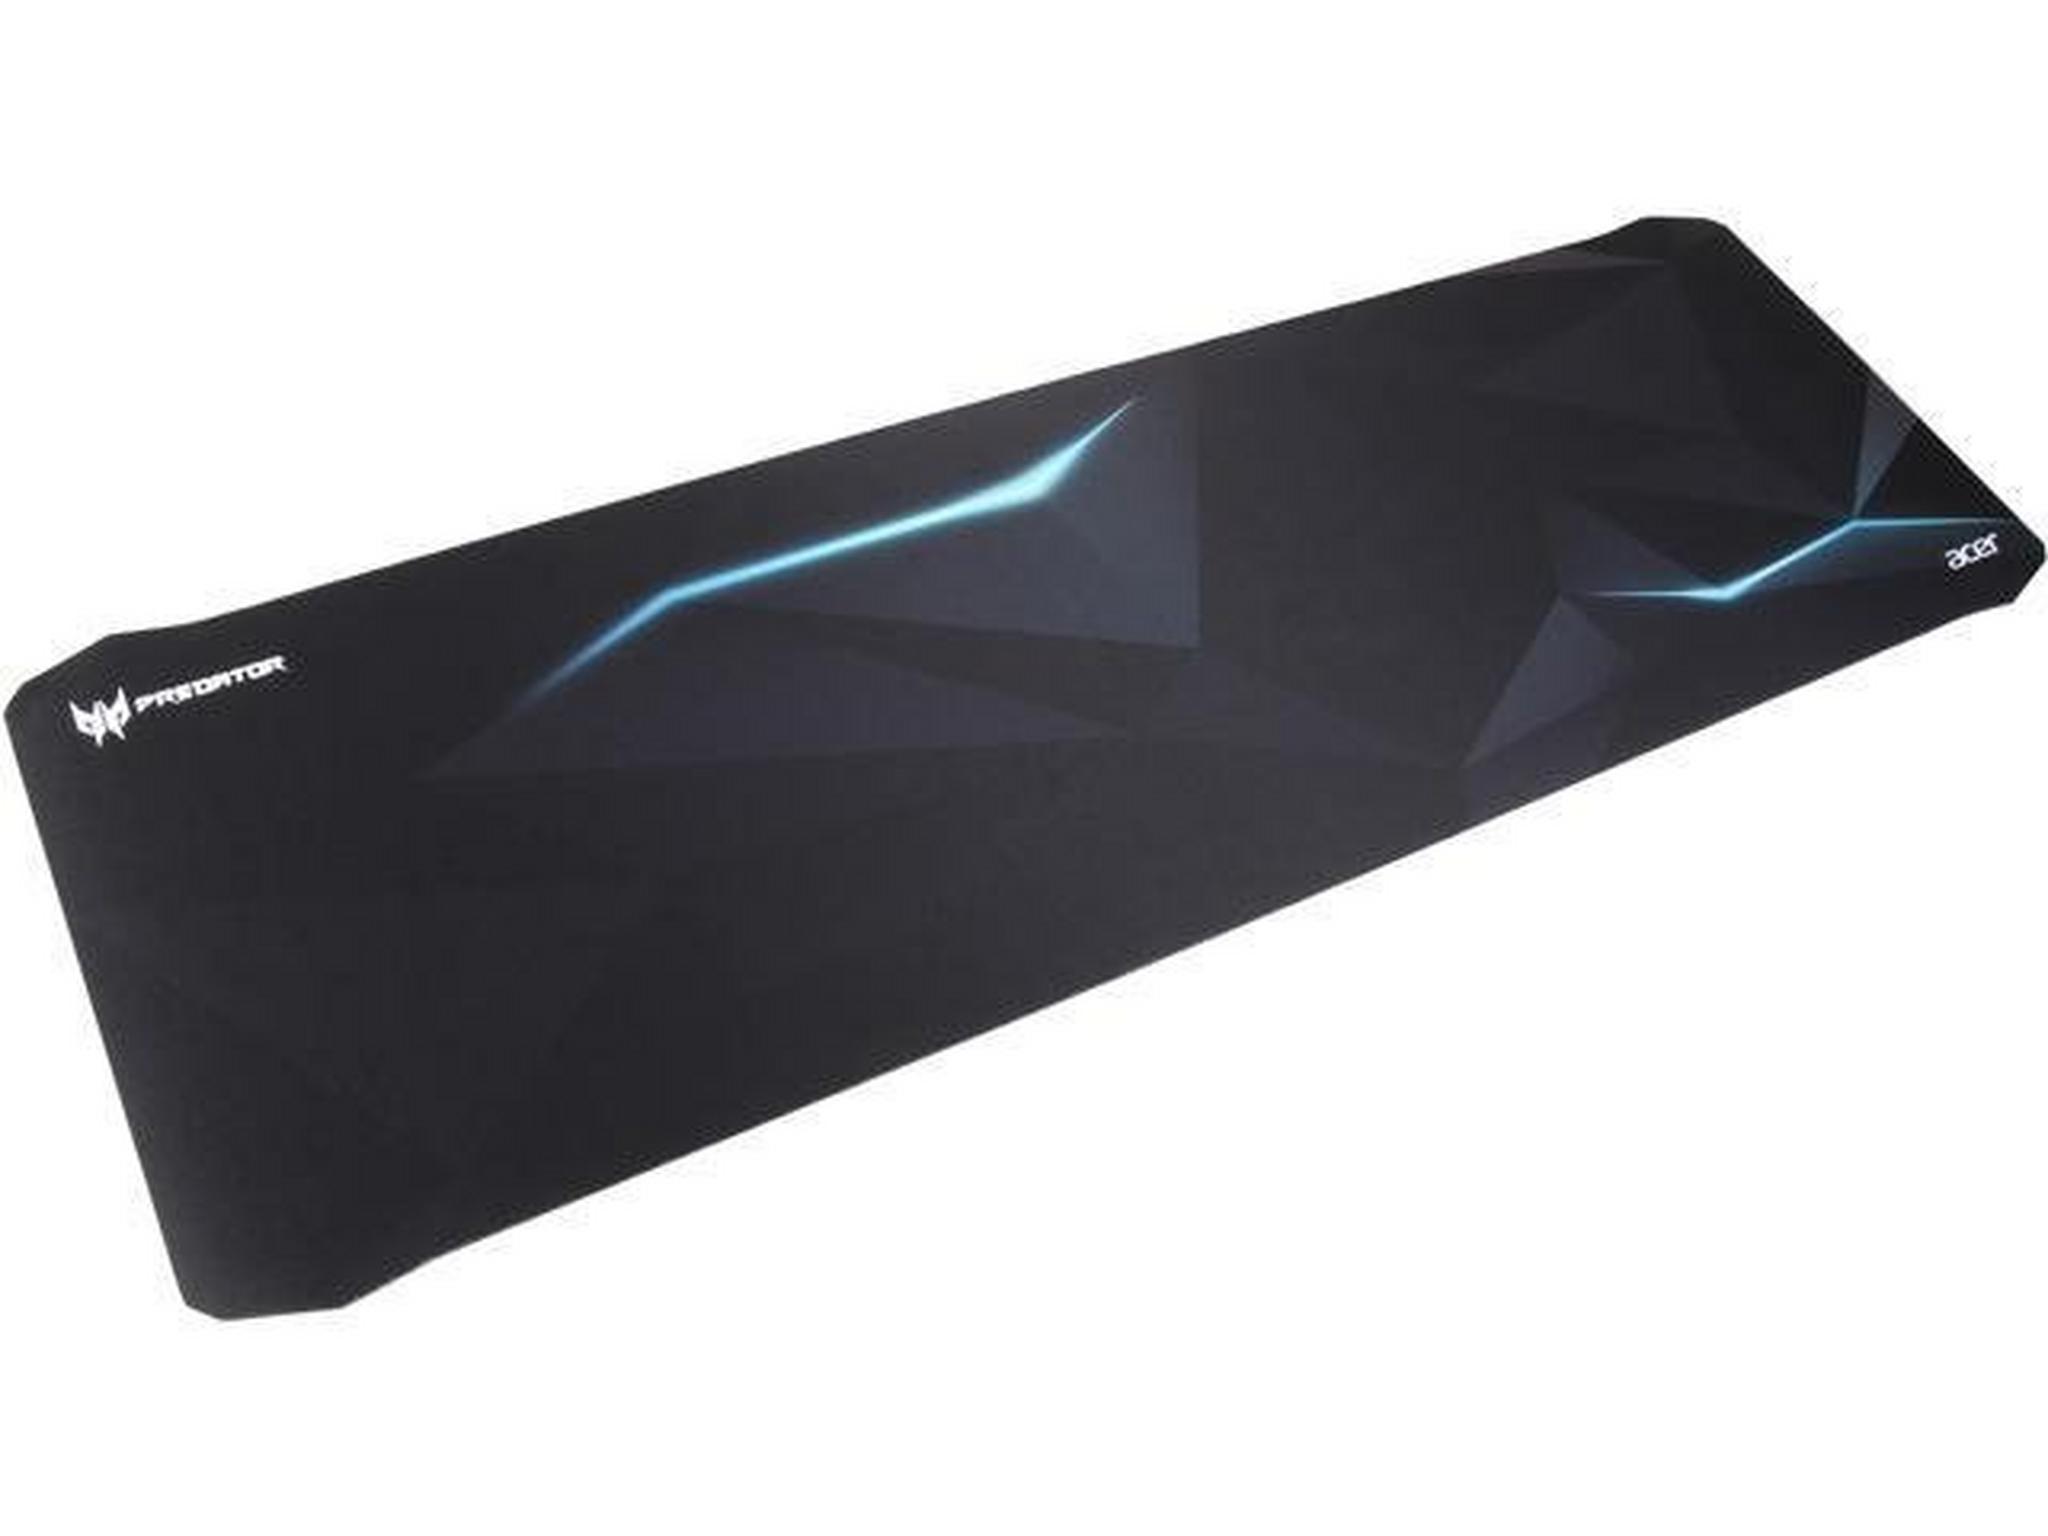 Acer Predator Spirits XL Mouse Pad